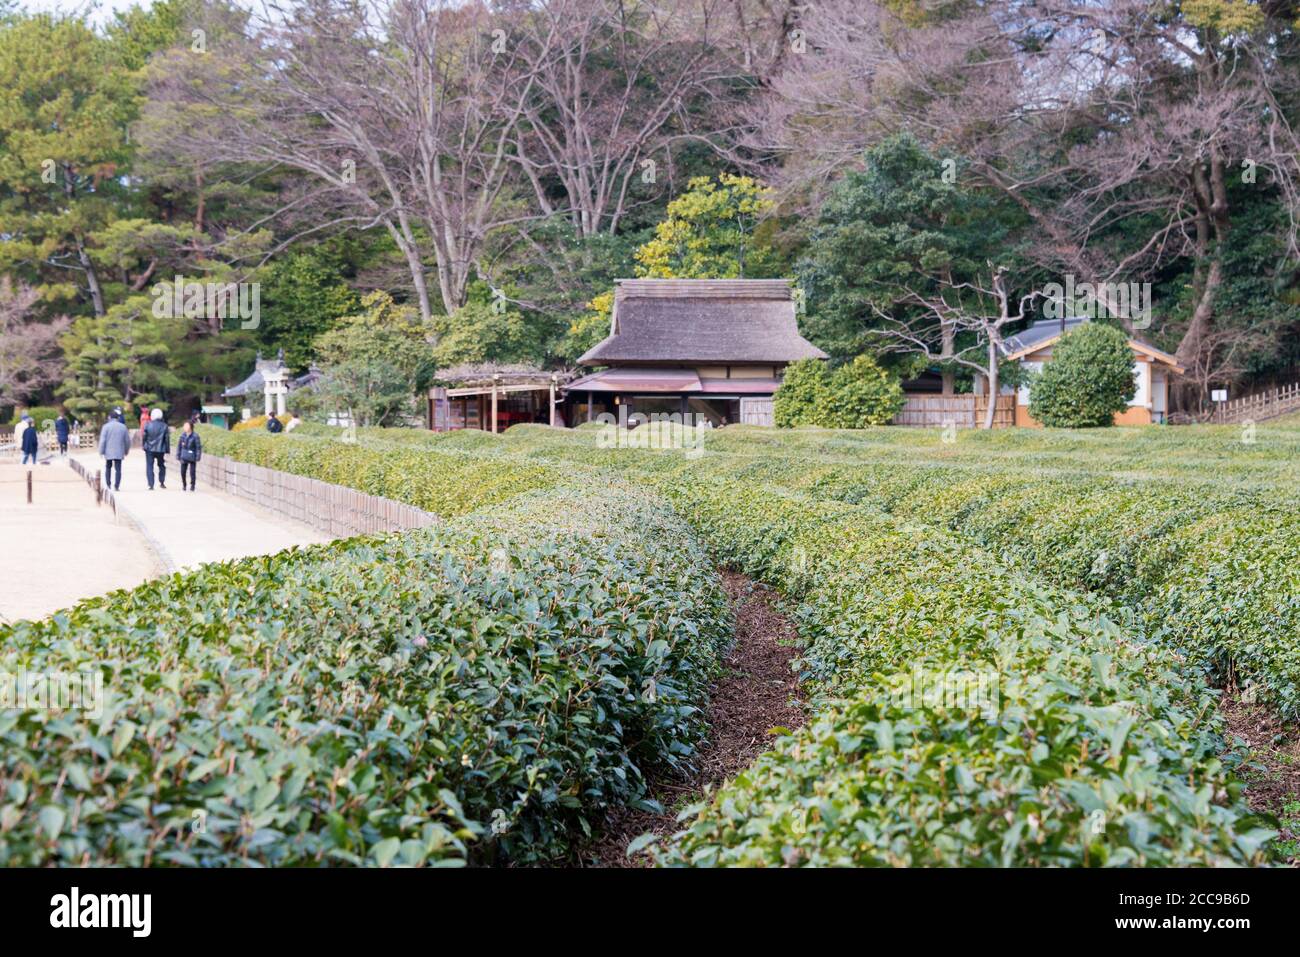 Okayama, Japan - Tea garden at Korakuen Garden in Okayama, Japan. Korakuen was built in 1700 by Ikeda Tsunamasa, lord of Okayama. Stock Photo